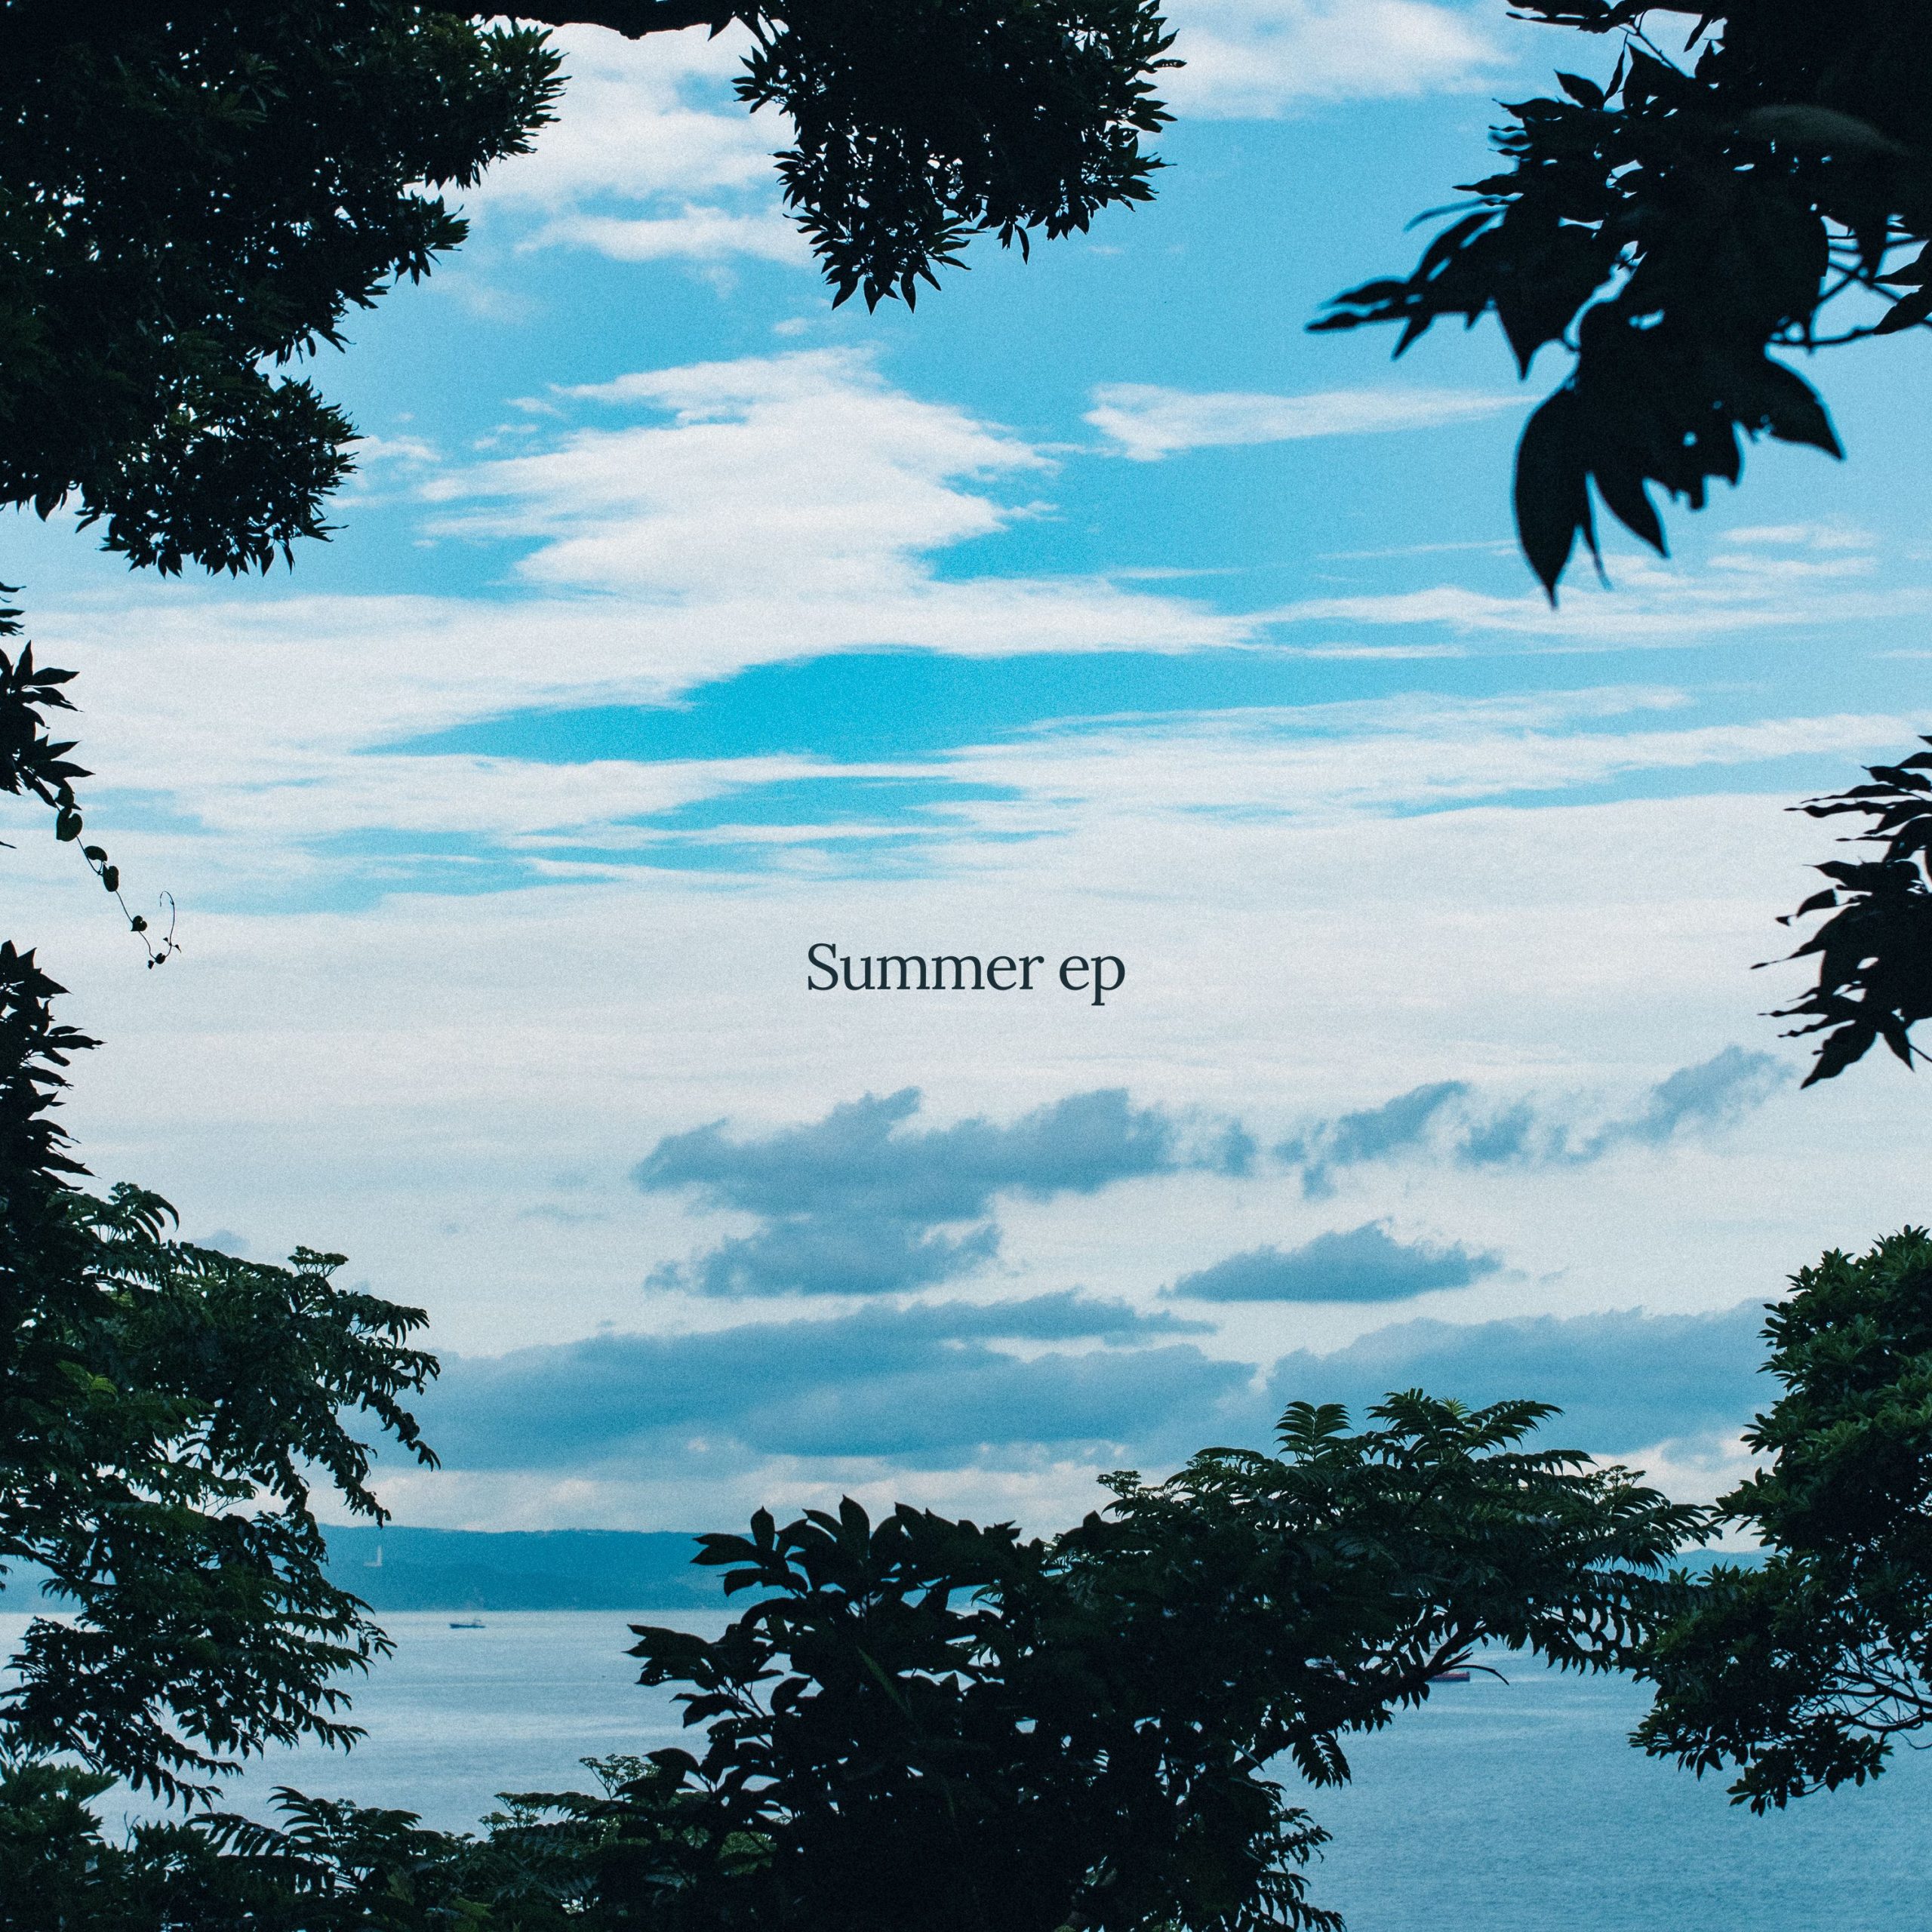 Summer ep